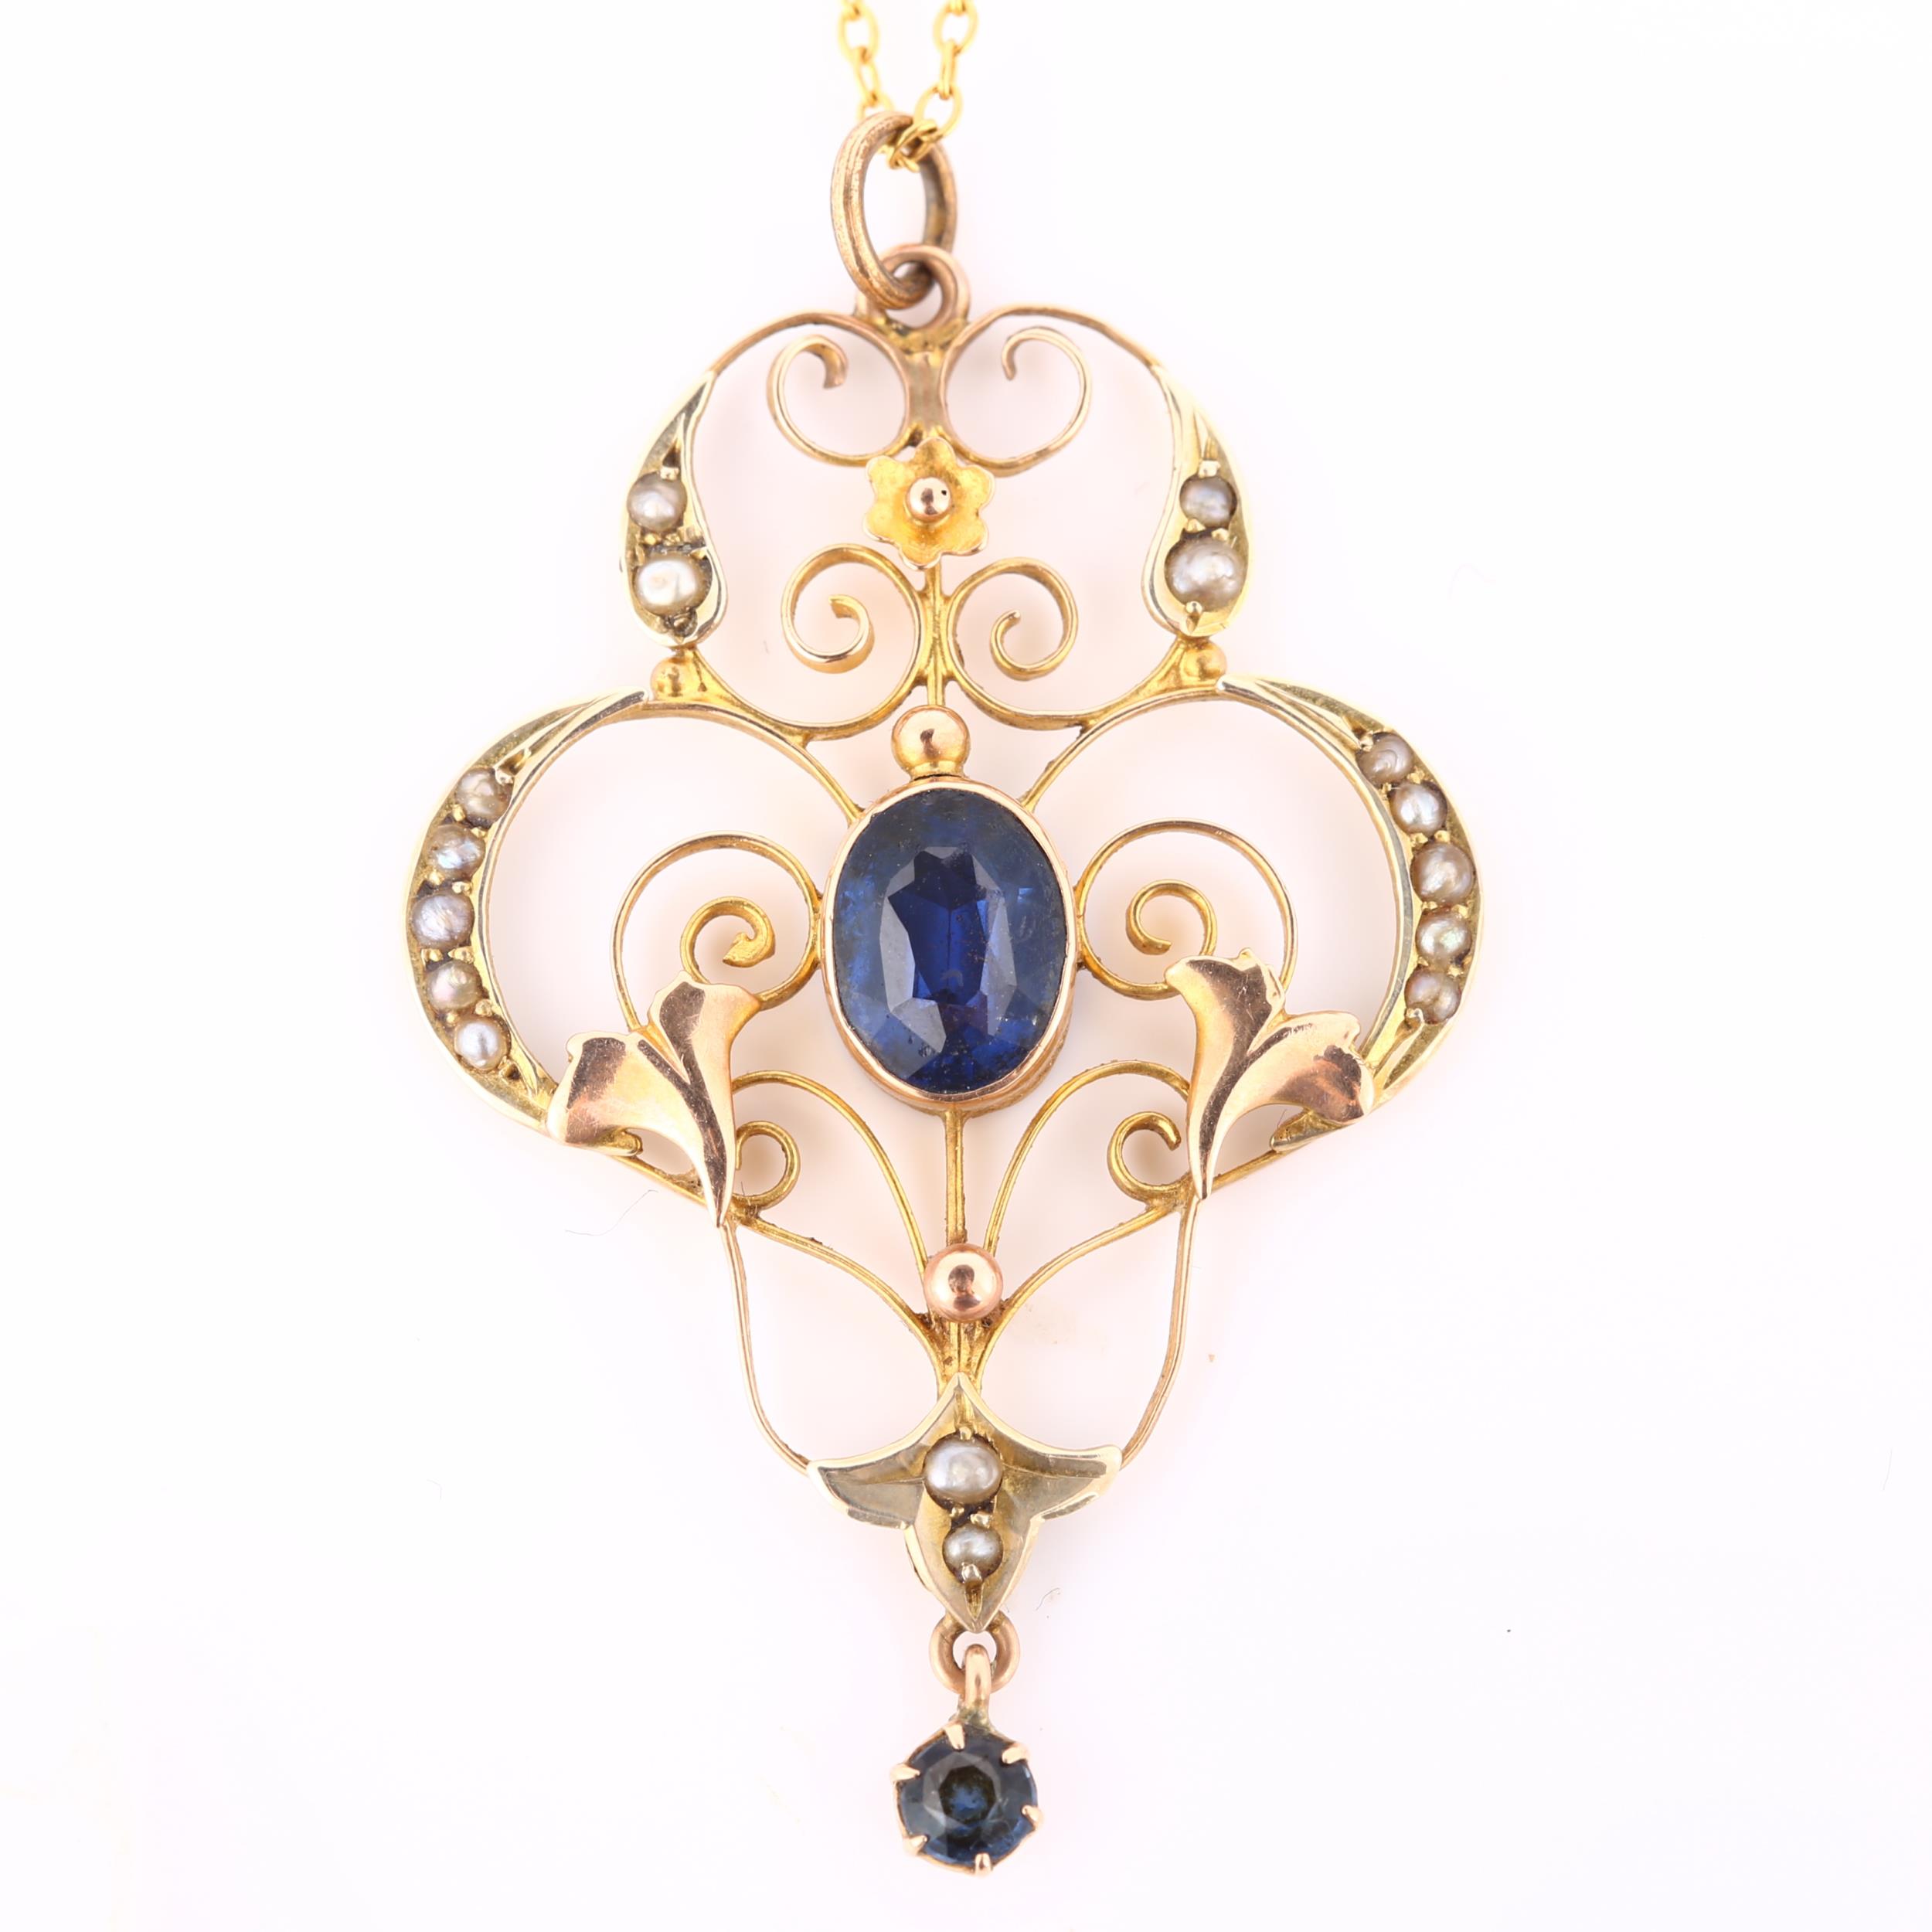 An Edwardian Art Nouveau 9ct gold stone set openwork pendant necklace, set with oval mixed-cut